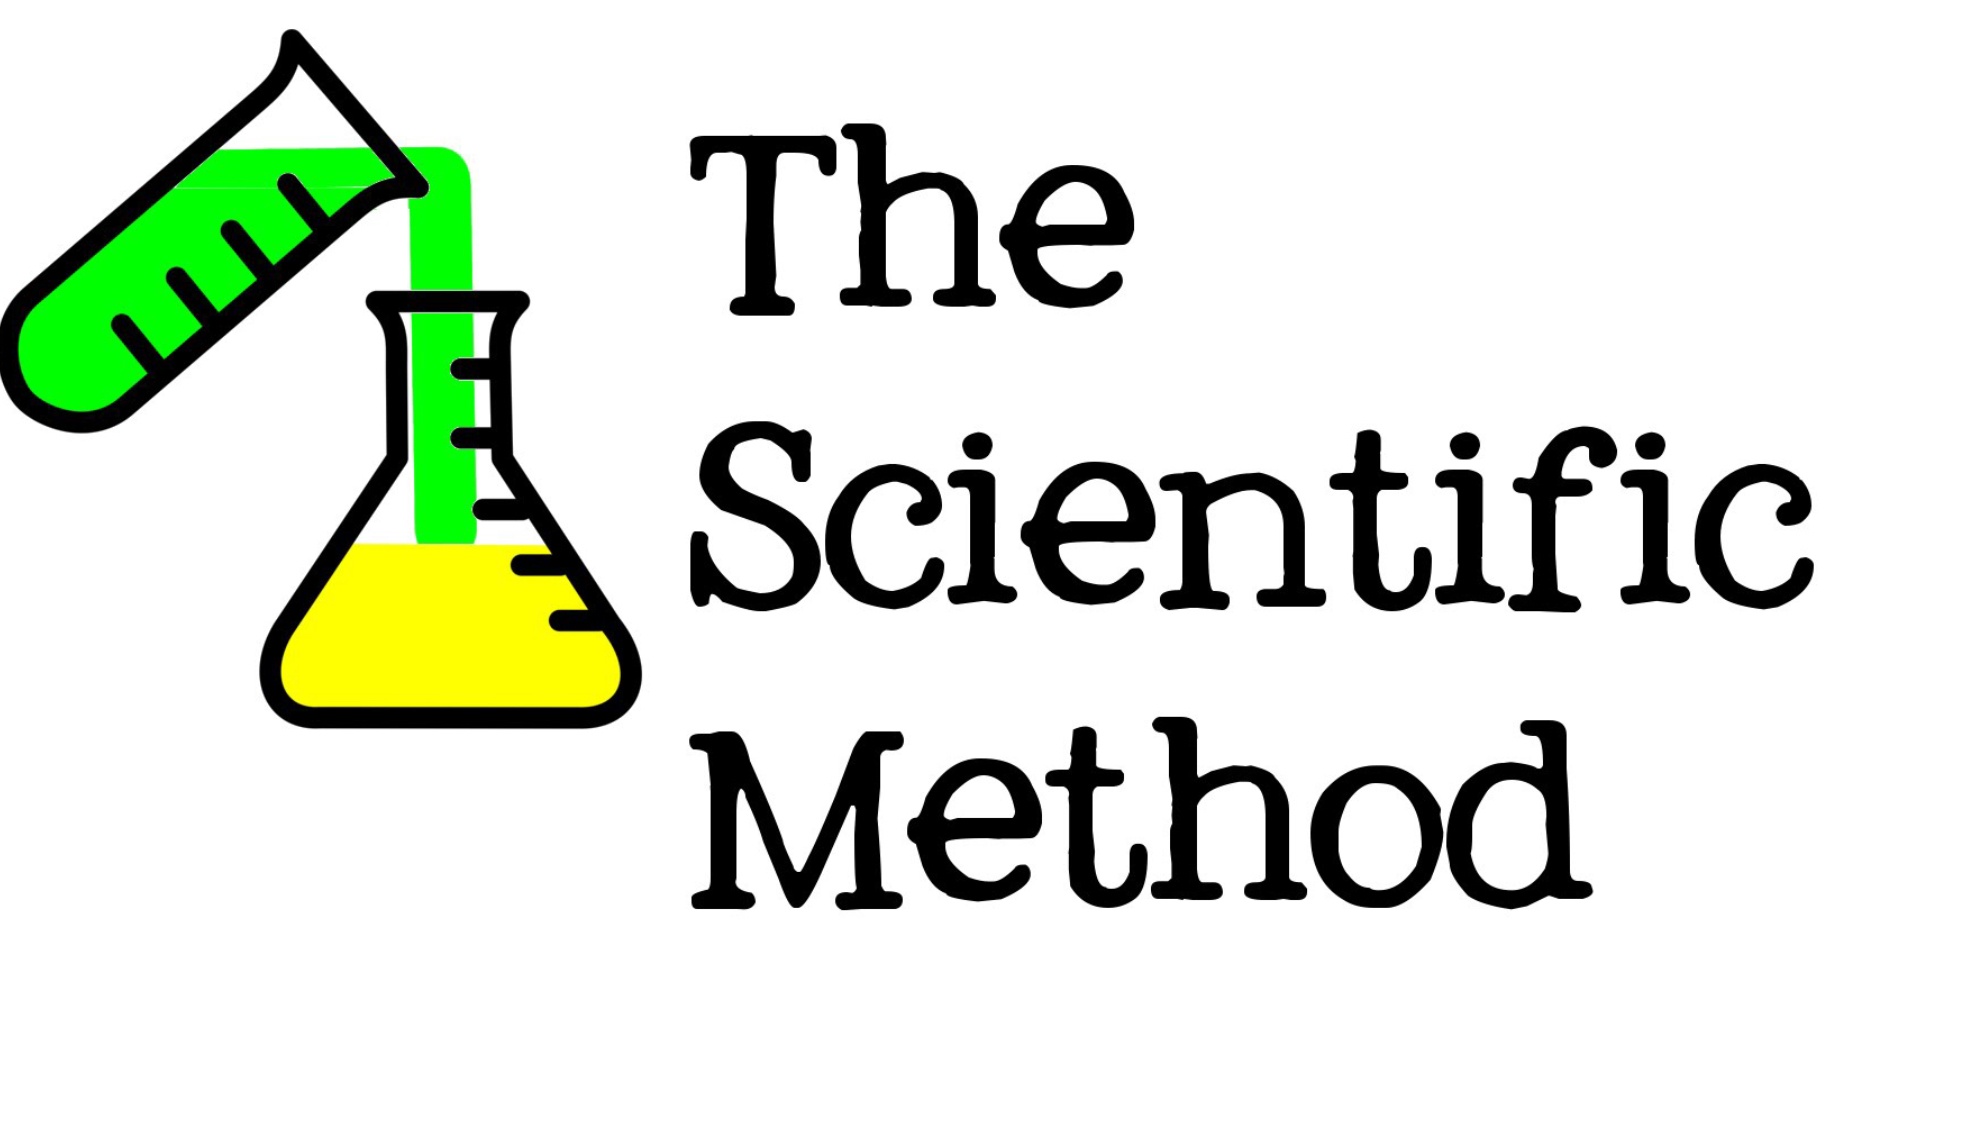 Scientific method. Steps of the Scientific method. Scientific methods of research. Scientific research methodology.